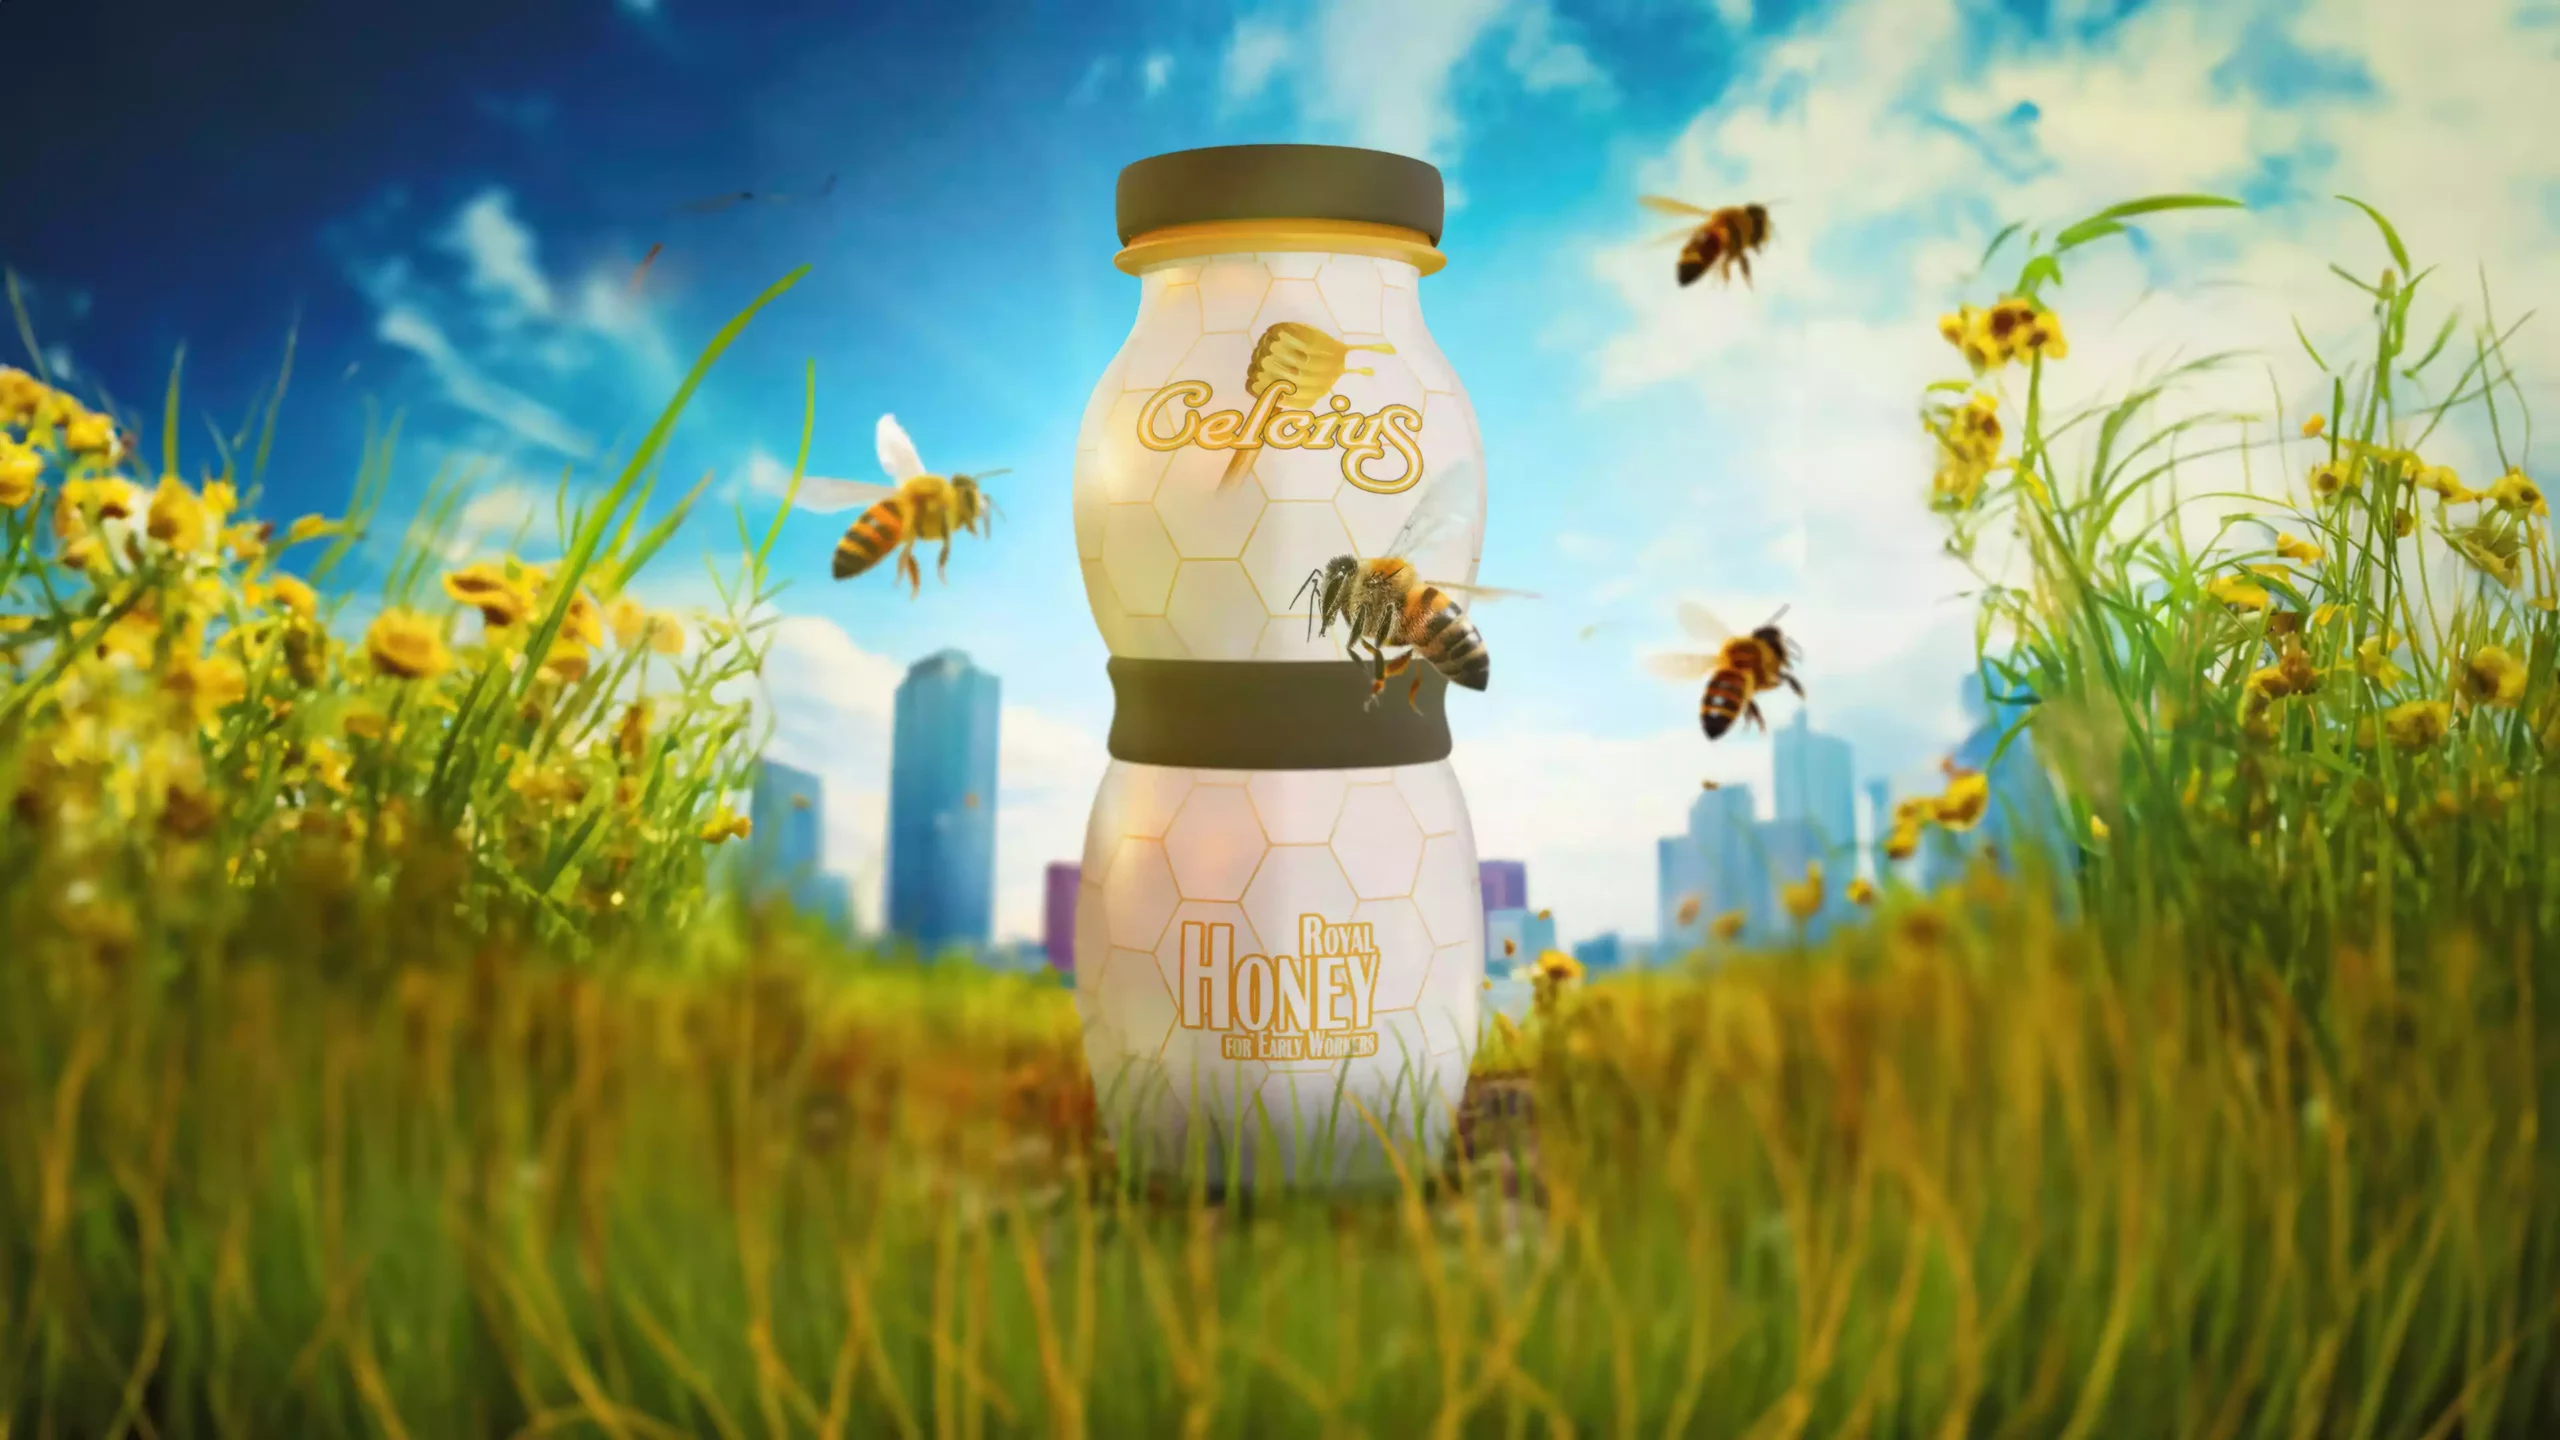 Celsius - Honey